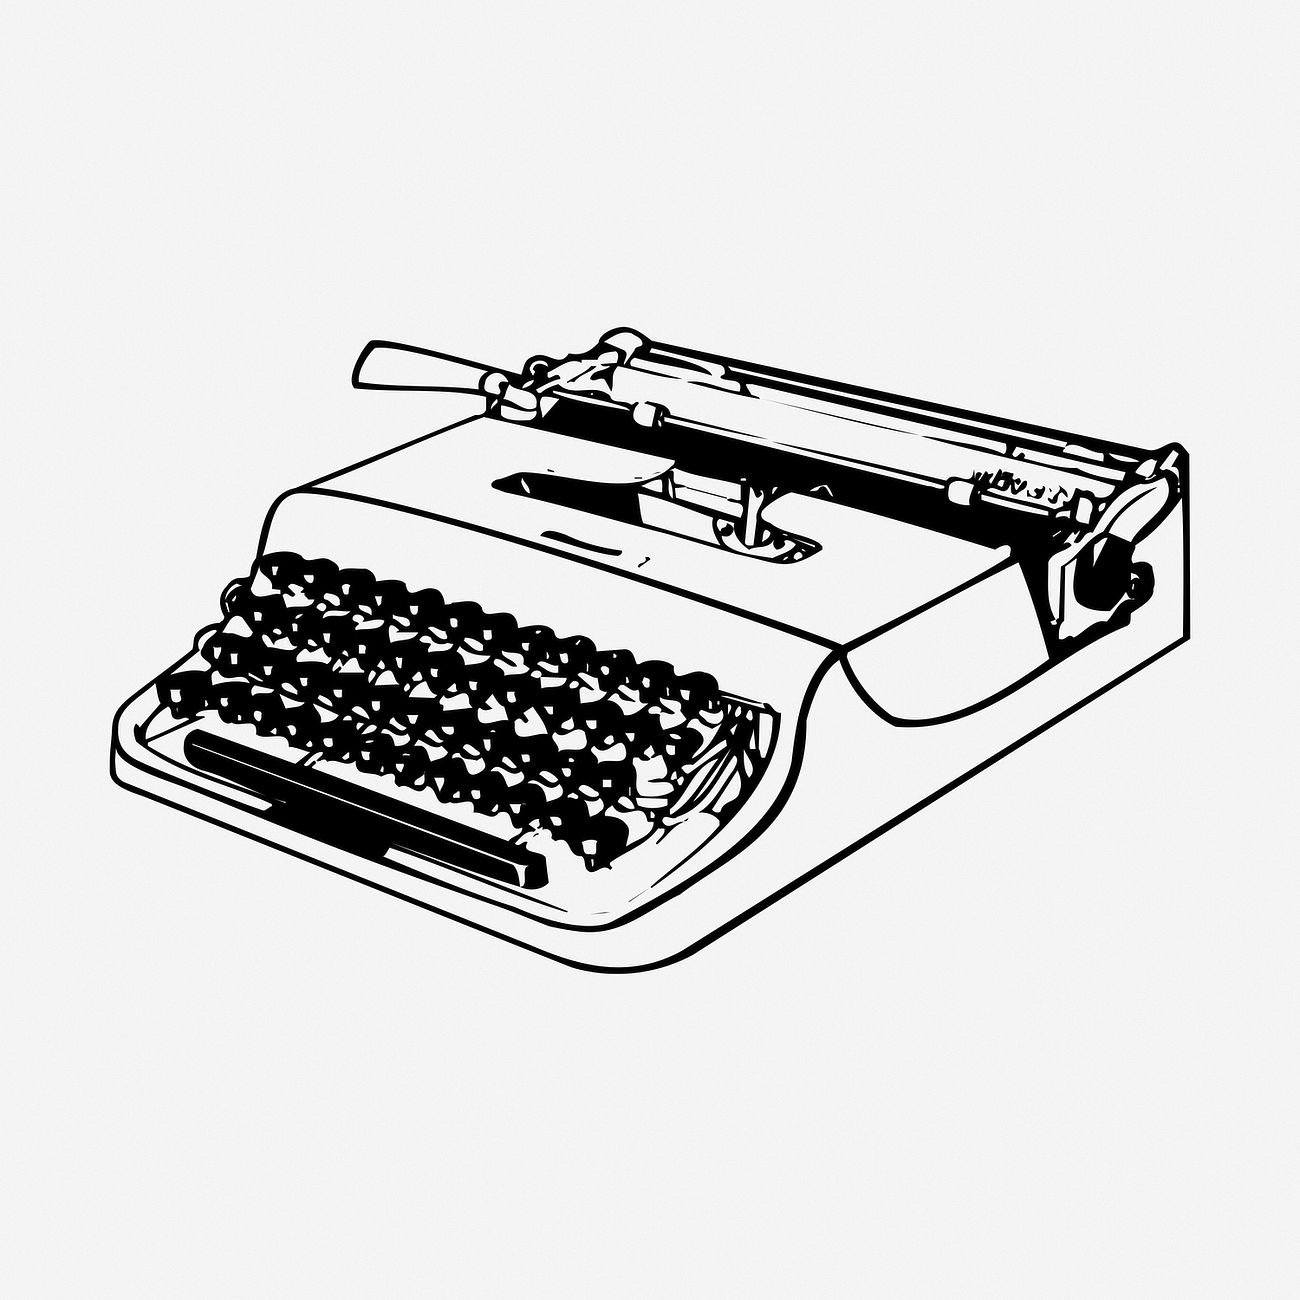 Typewrite drawing, vintage object illustration